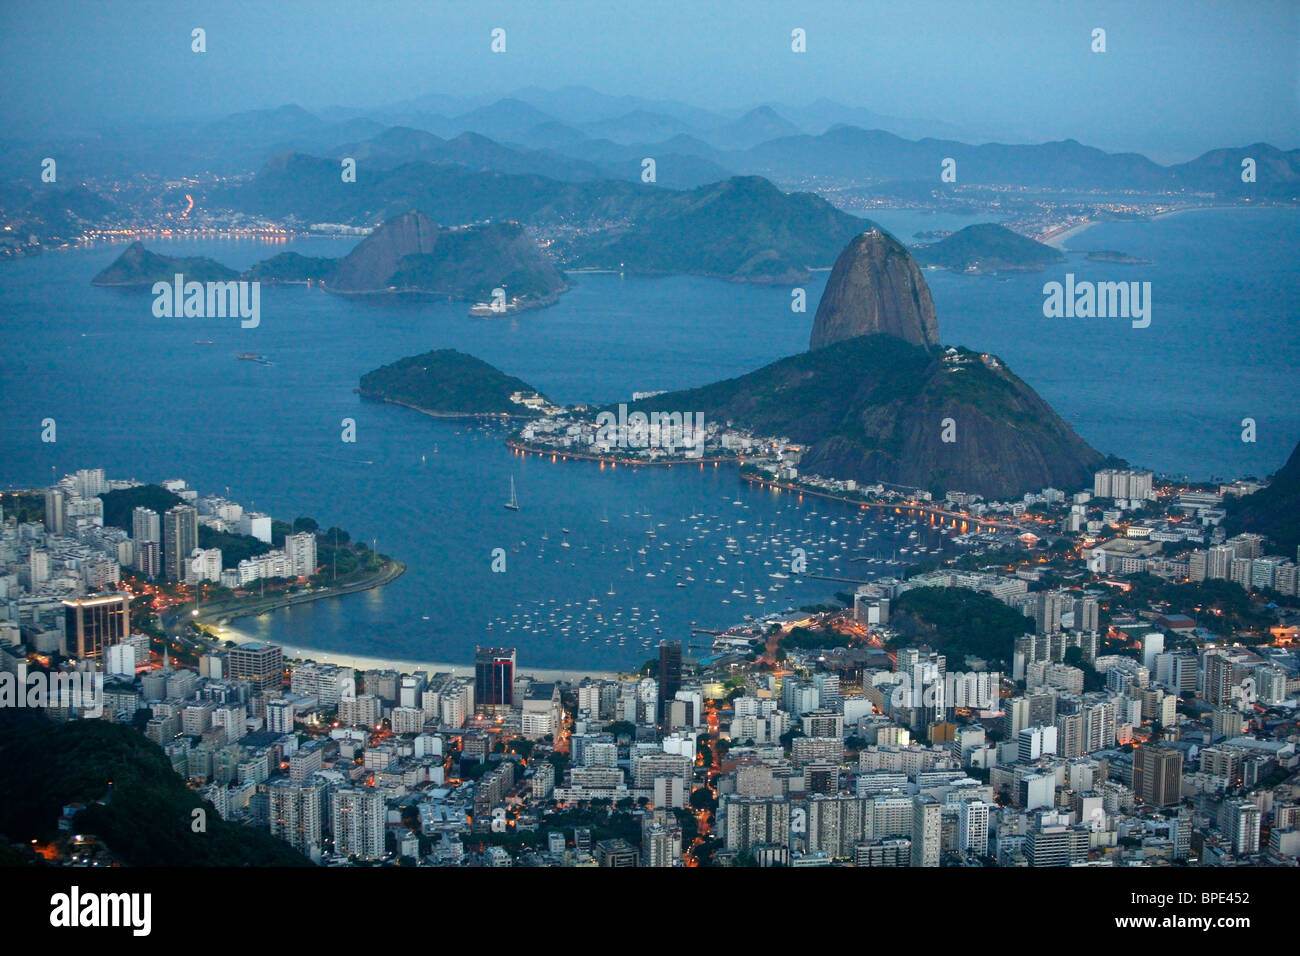 View of the Pao Acucar or Sugar loaf mountain and the bay of Botafogo, Rio de Janeiro, Brazil. Stock Photo